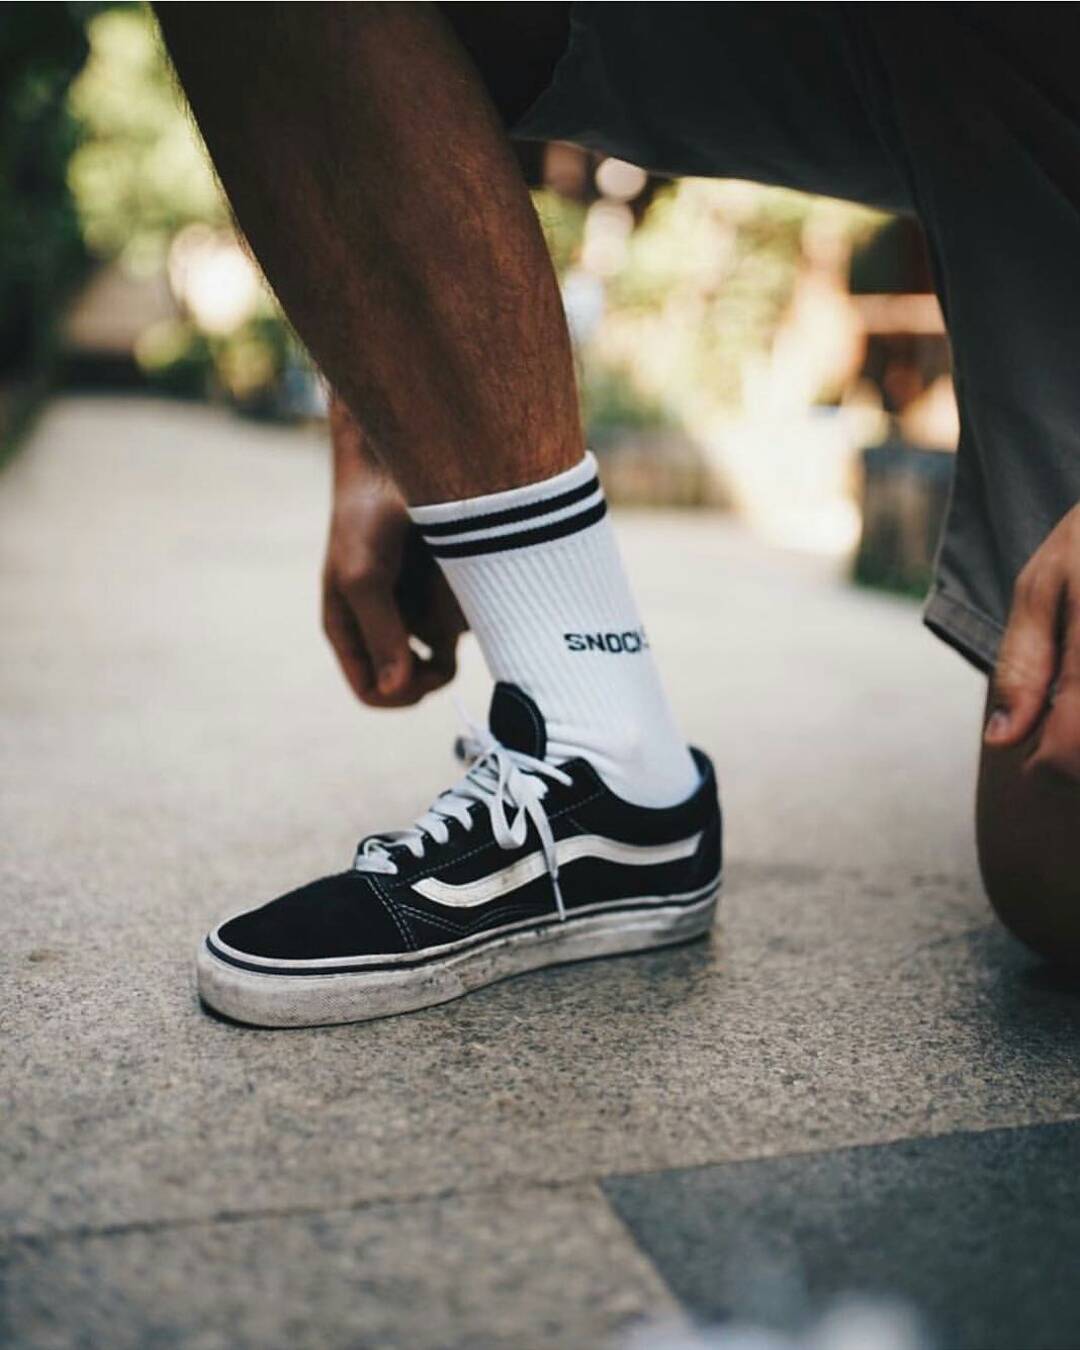 Unisex schwarz Sneaker Socken in Chucks Optik 